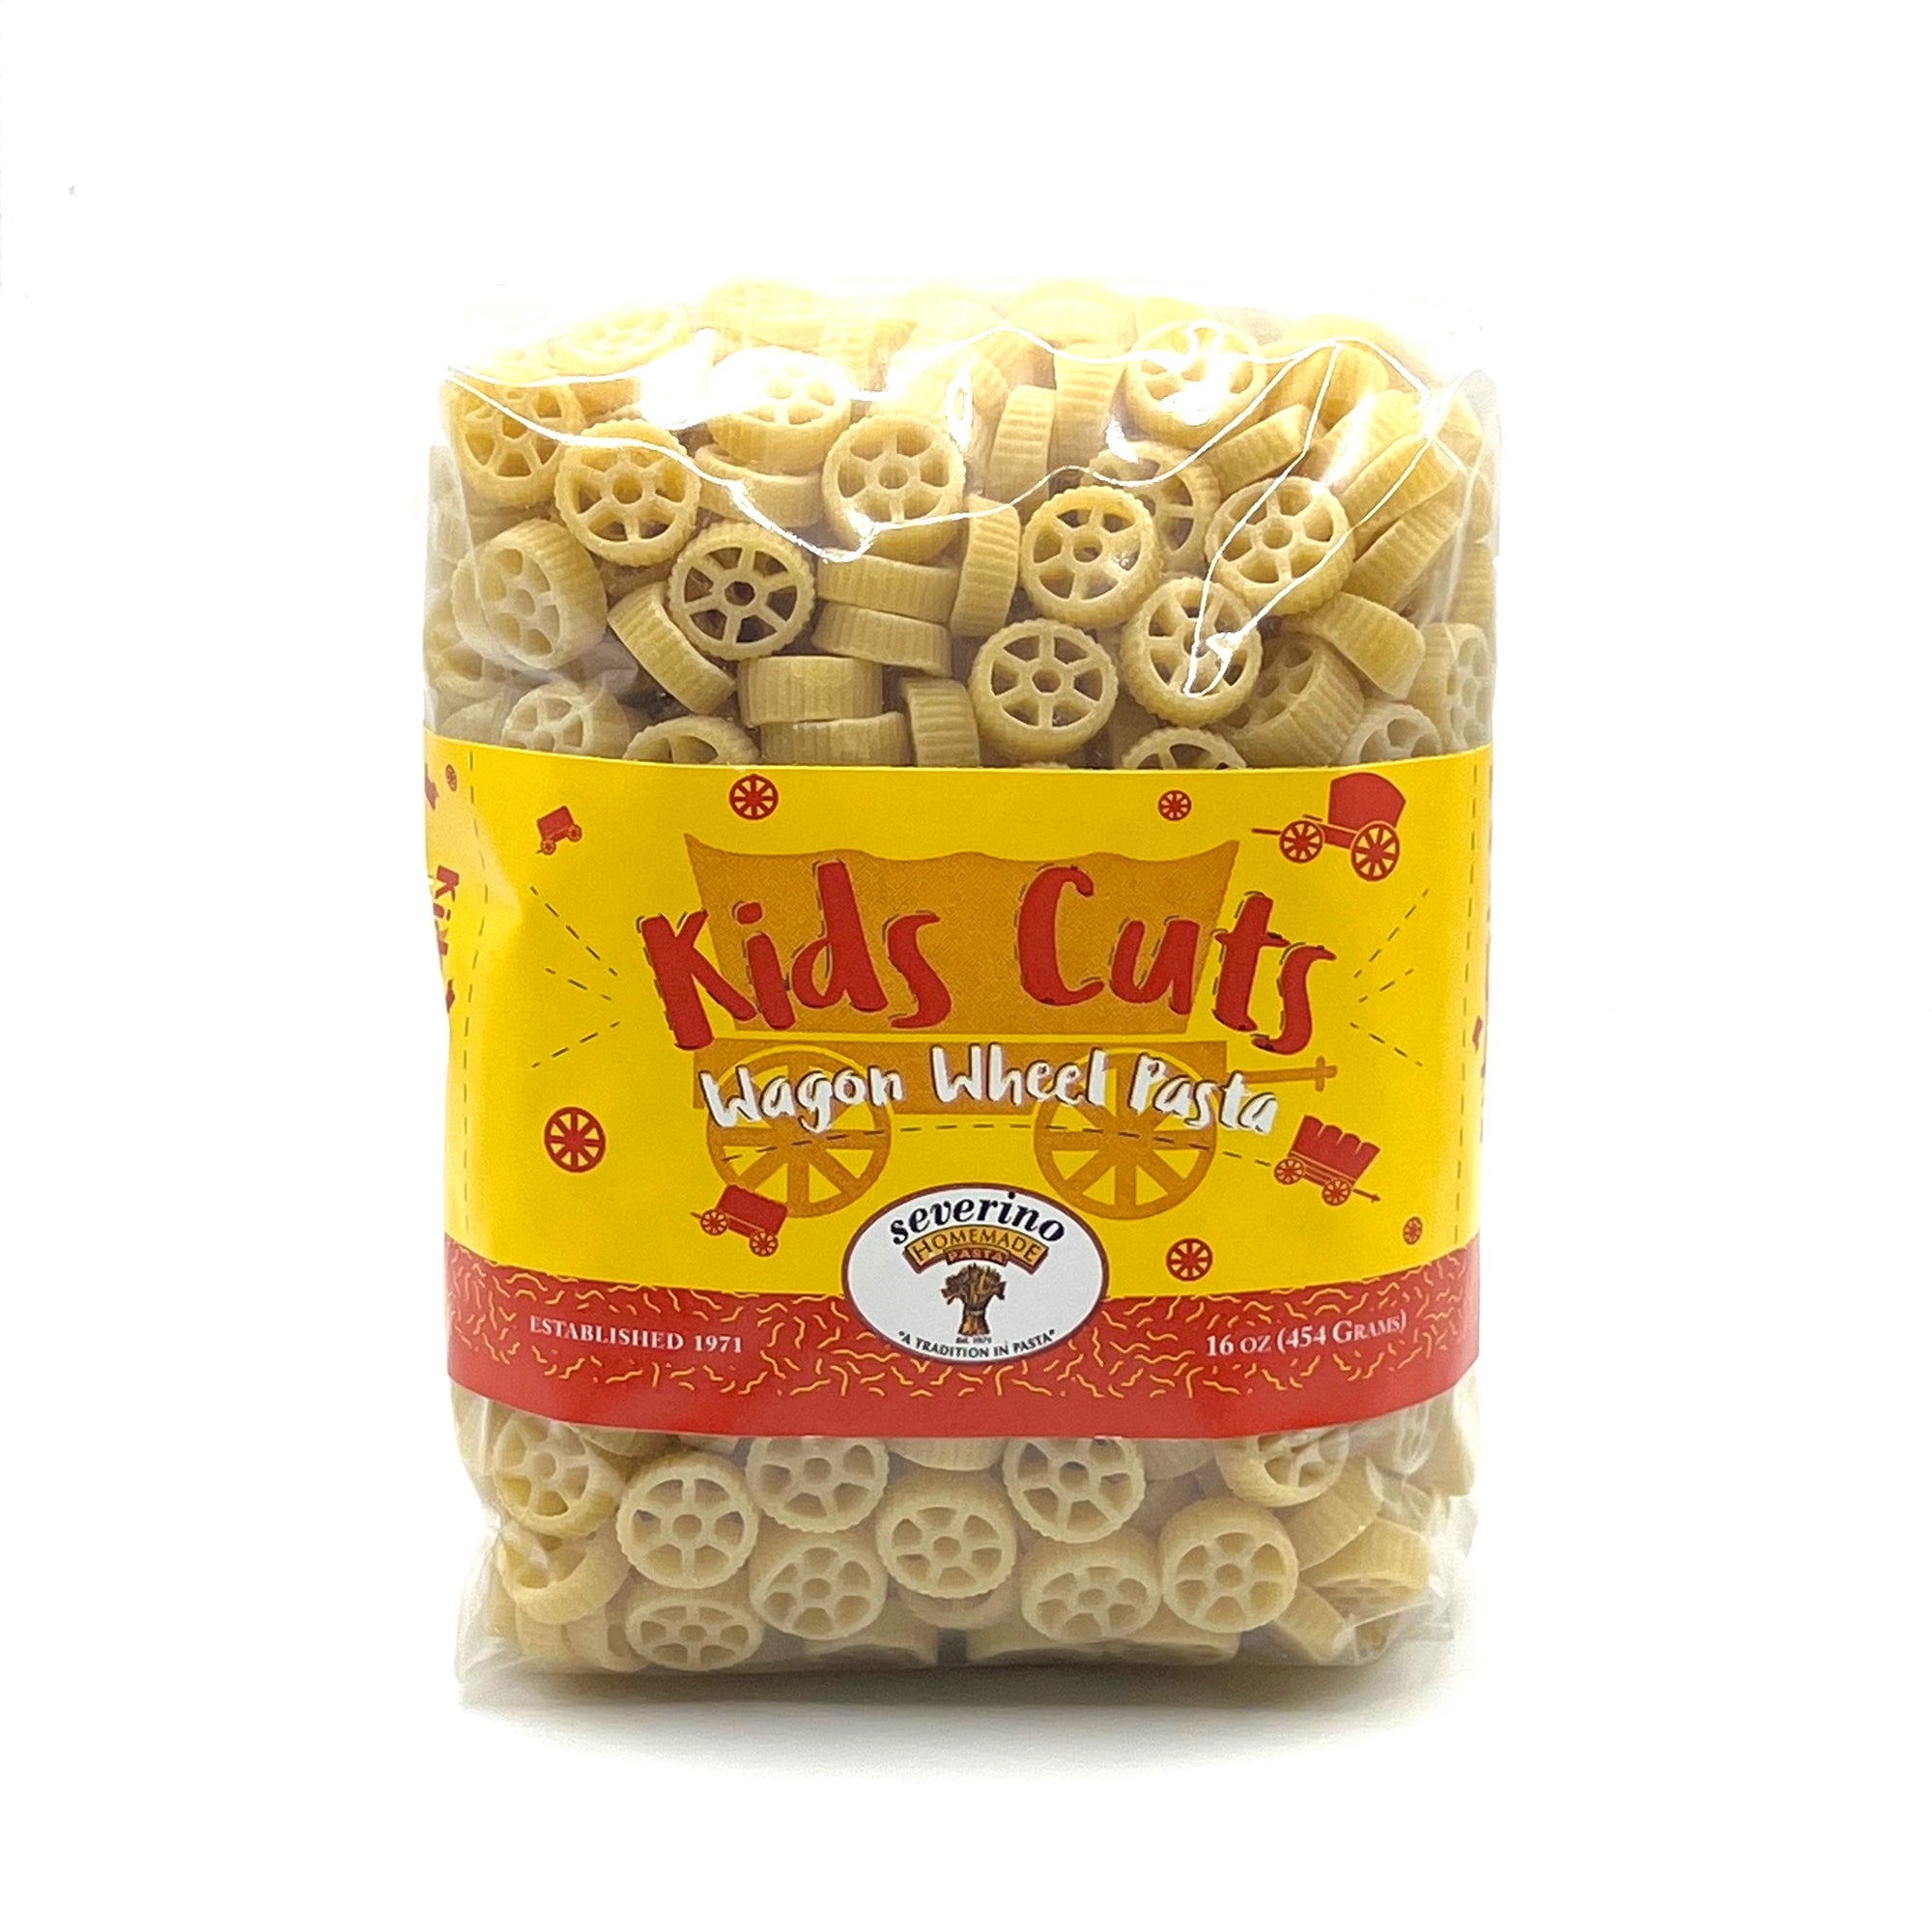 Kid's Cut - Wagon Wheel Pasta